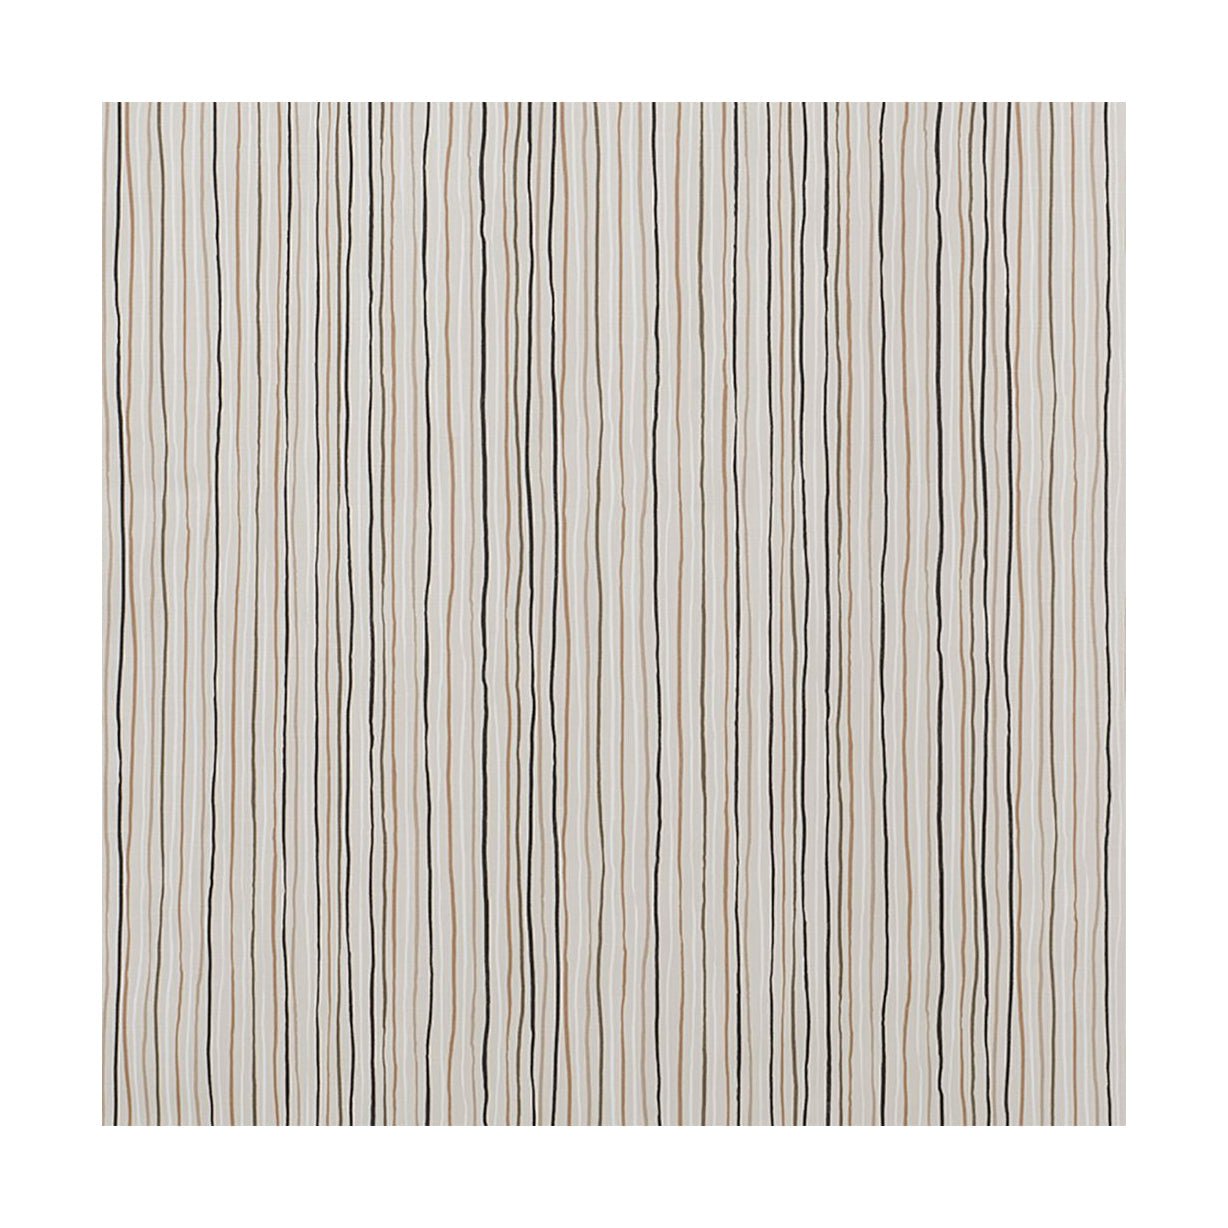 Largeur de tissu Spira Stripe 150 cm (prix par mètre), multi-naturel